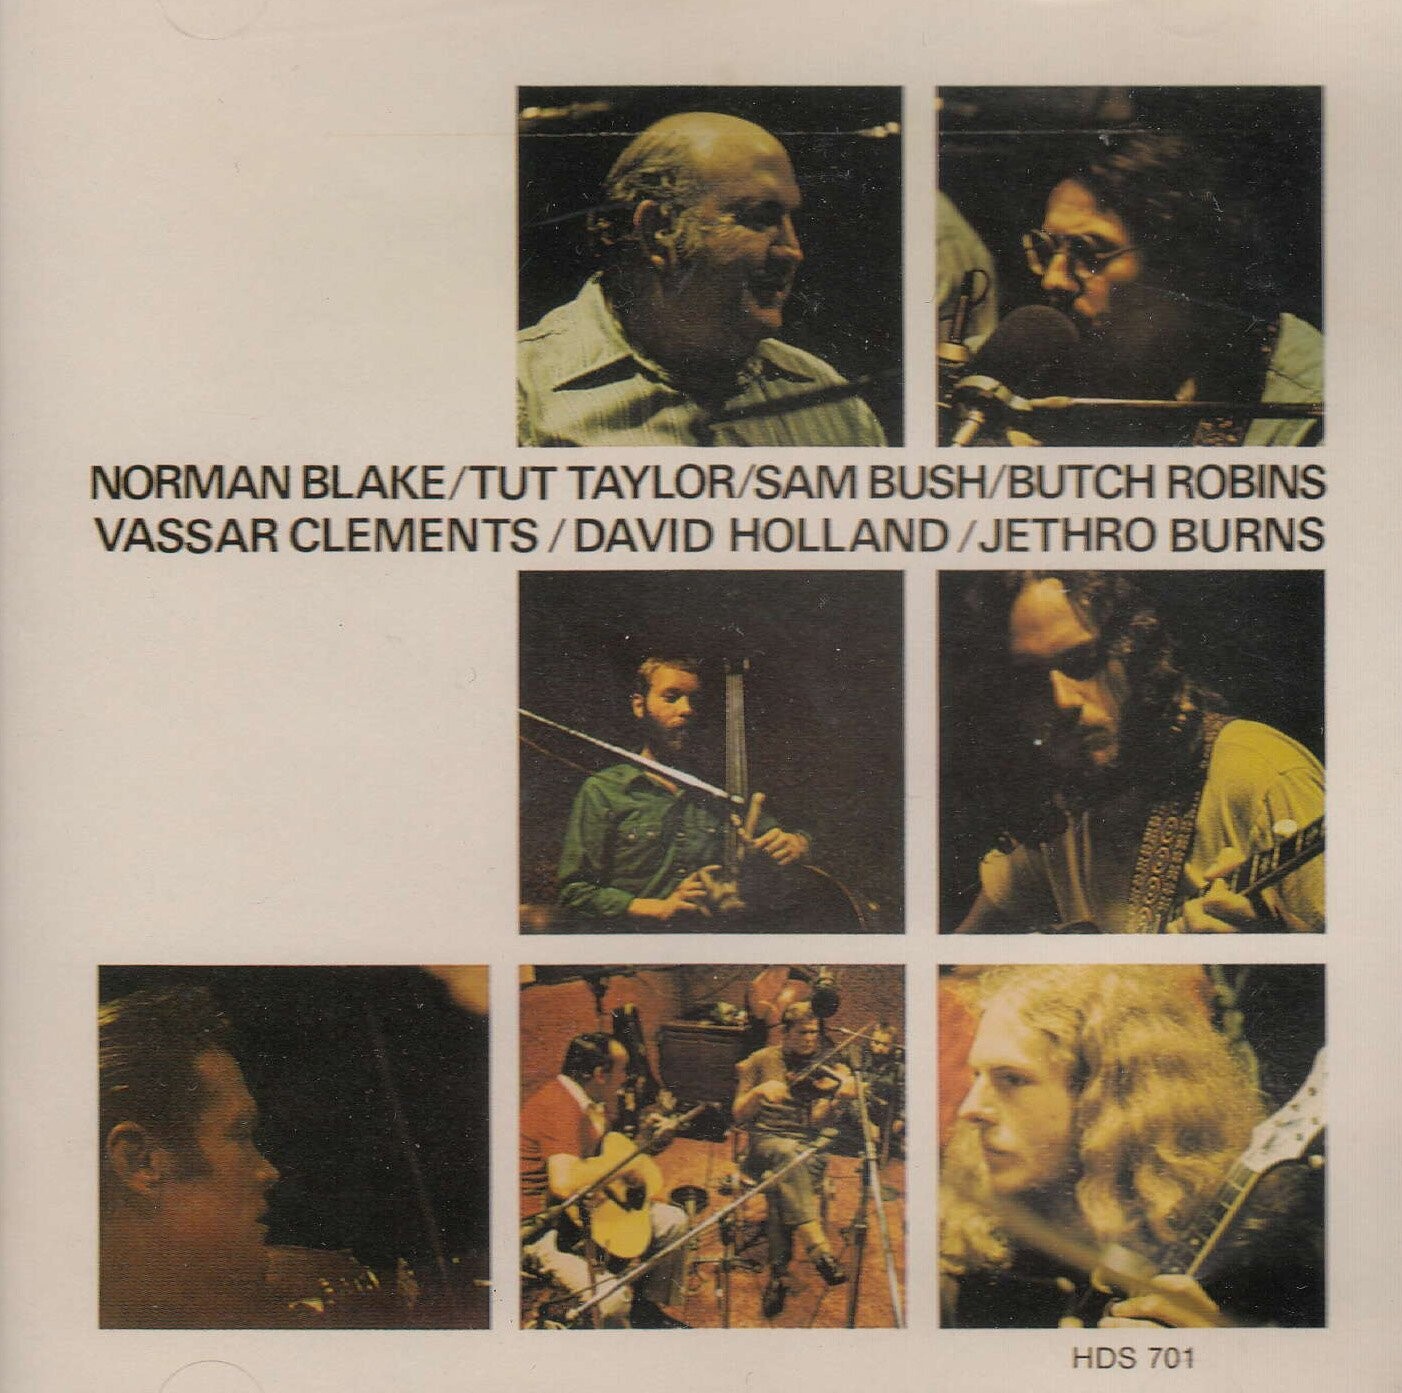 Norman Blake "Norman Blake/Tut Taylor/Sam Bush..." NM- 1975